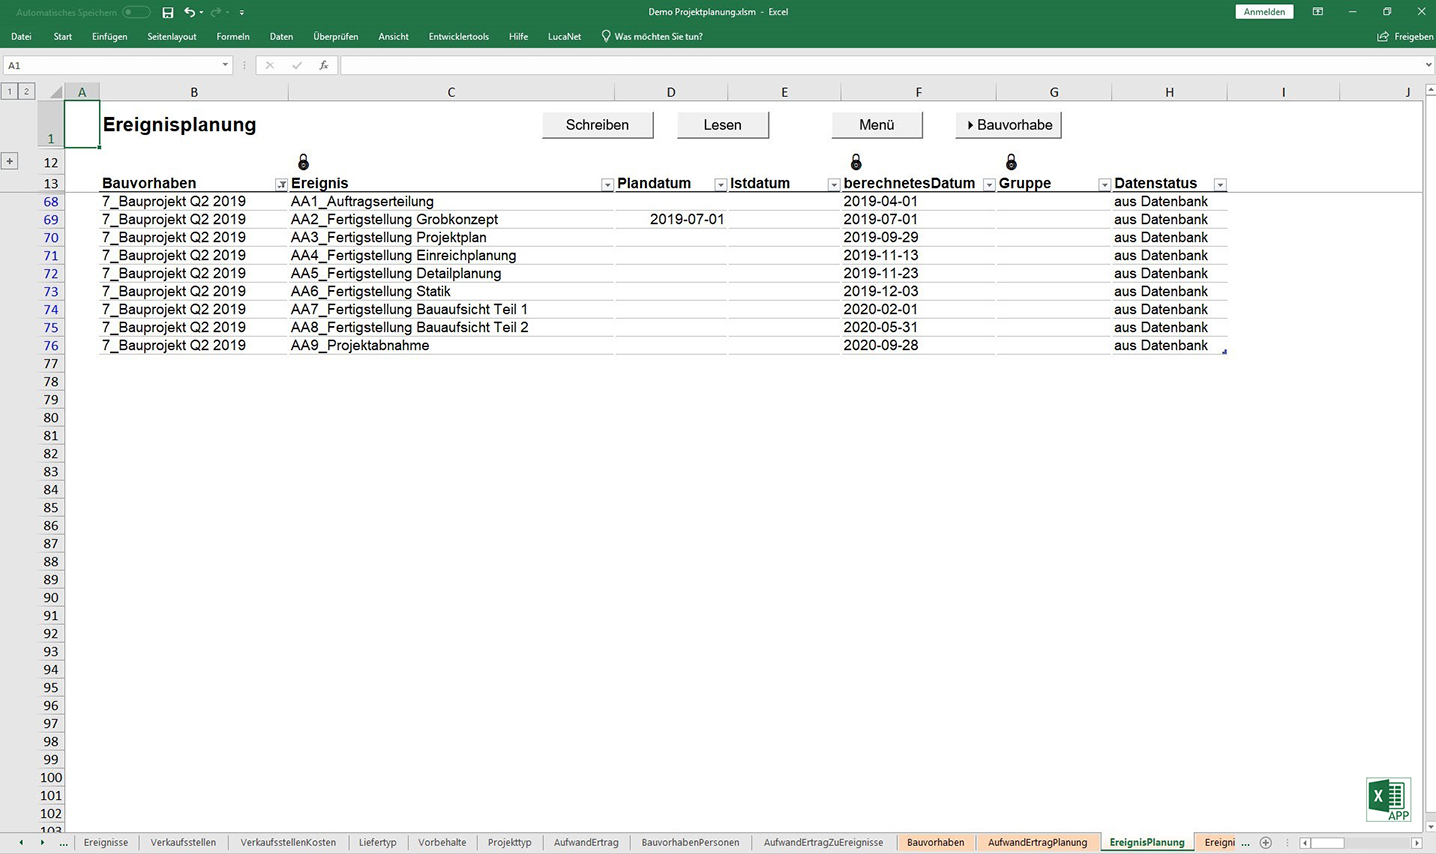 Ereignisplanung in der Excel APP "Projektplanung" von consultnetwork